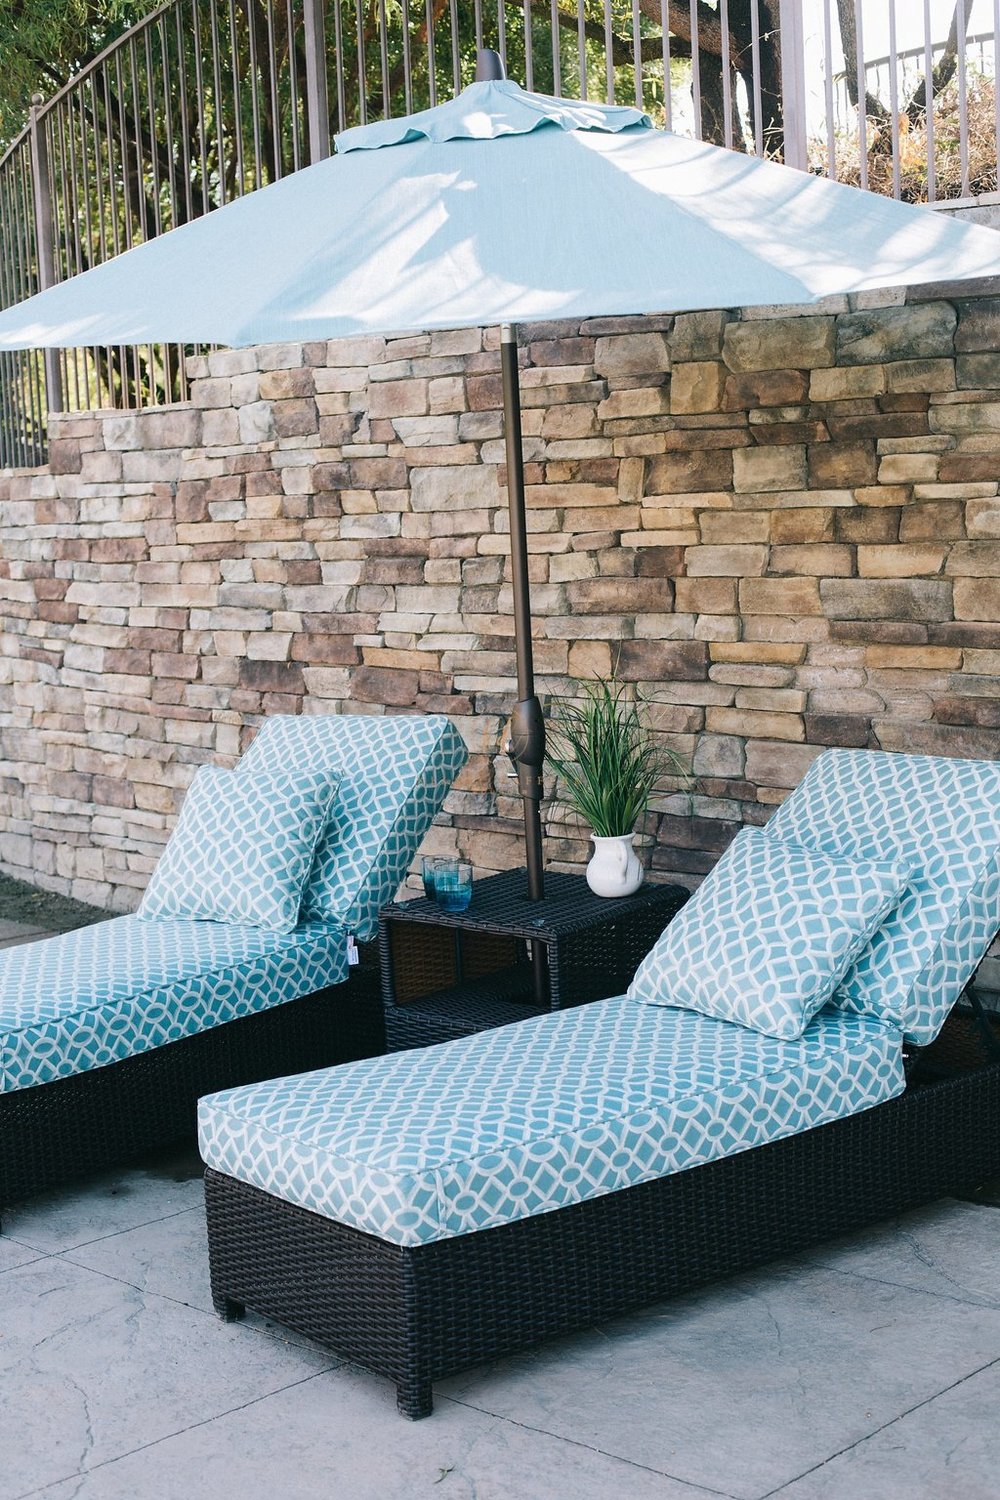 Why We Love Sunbrella Fabrics – Sunniland Patio - Patio Furniture